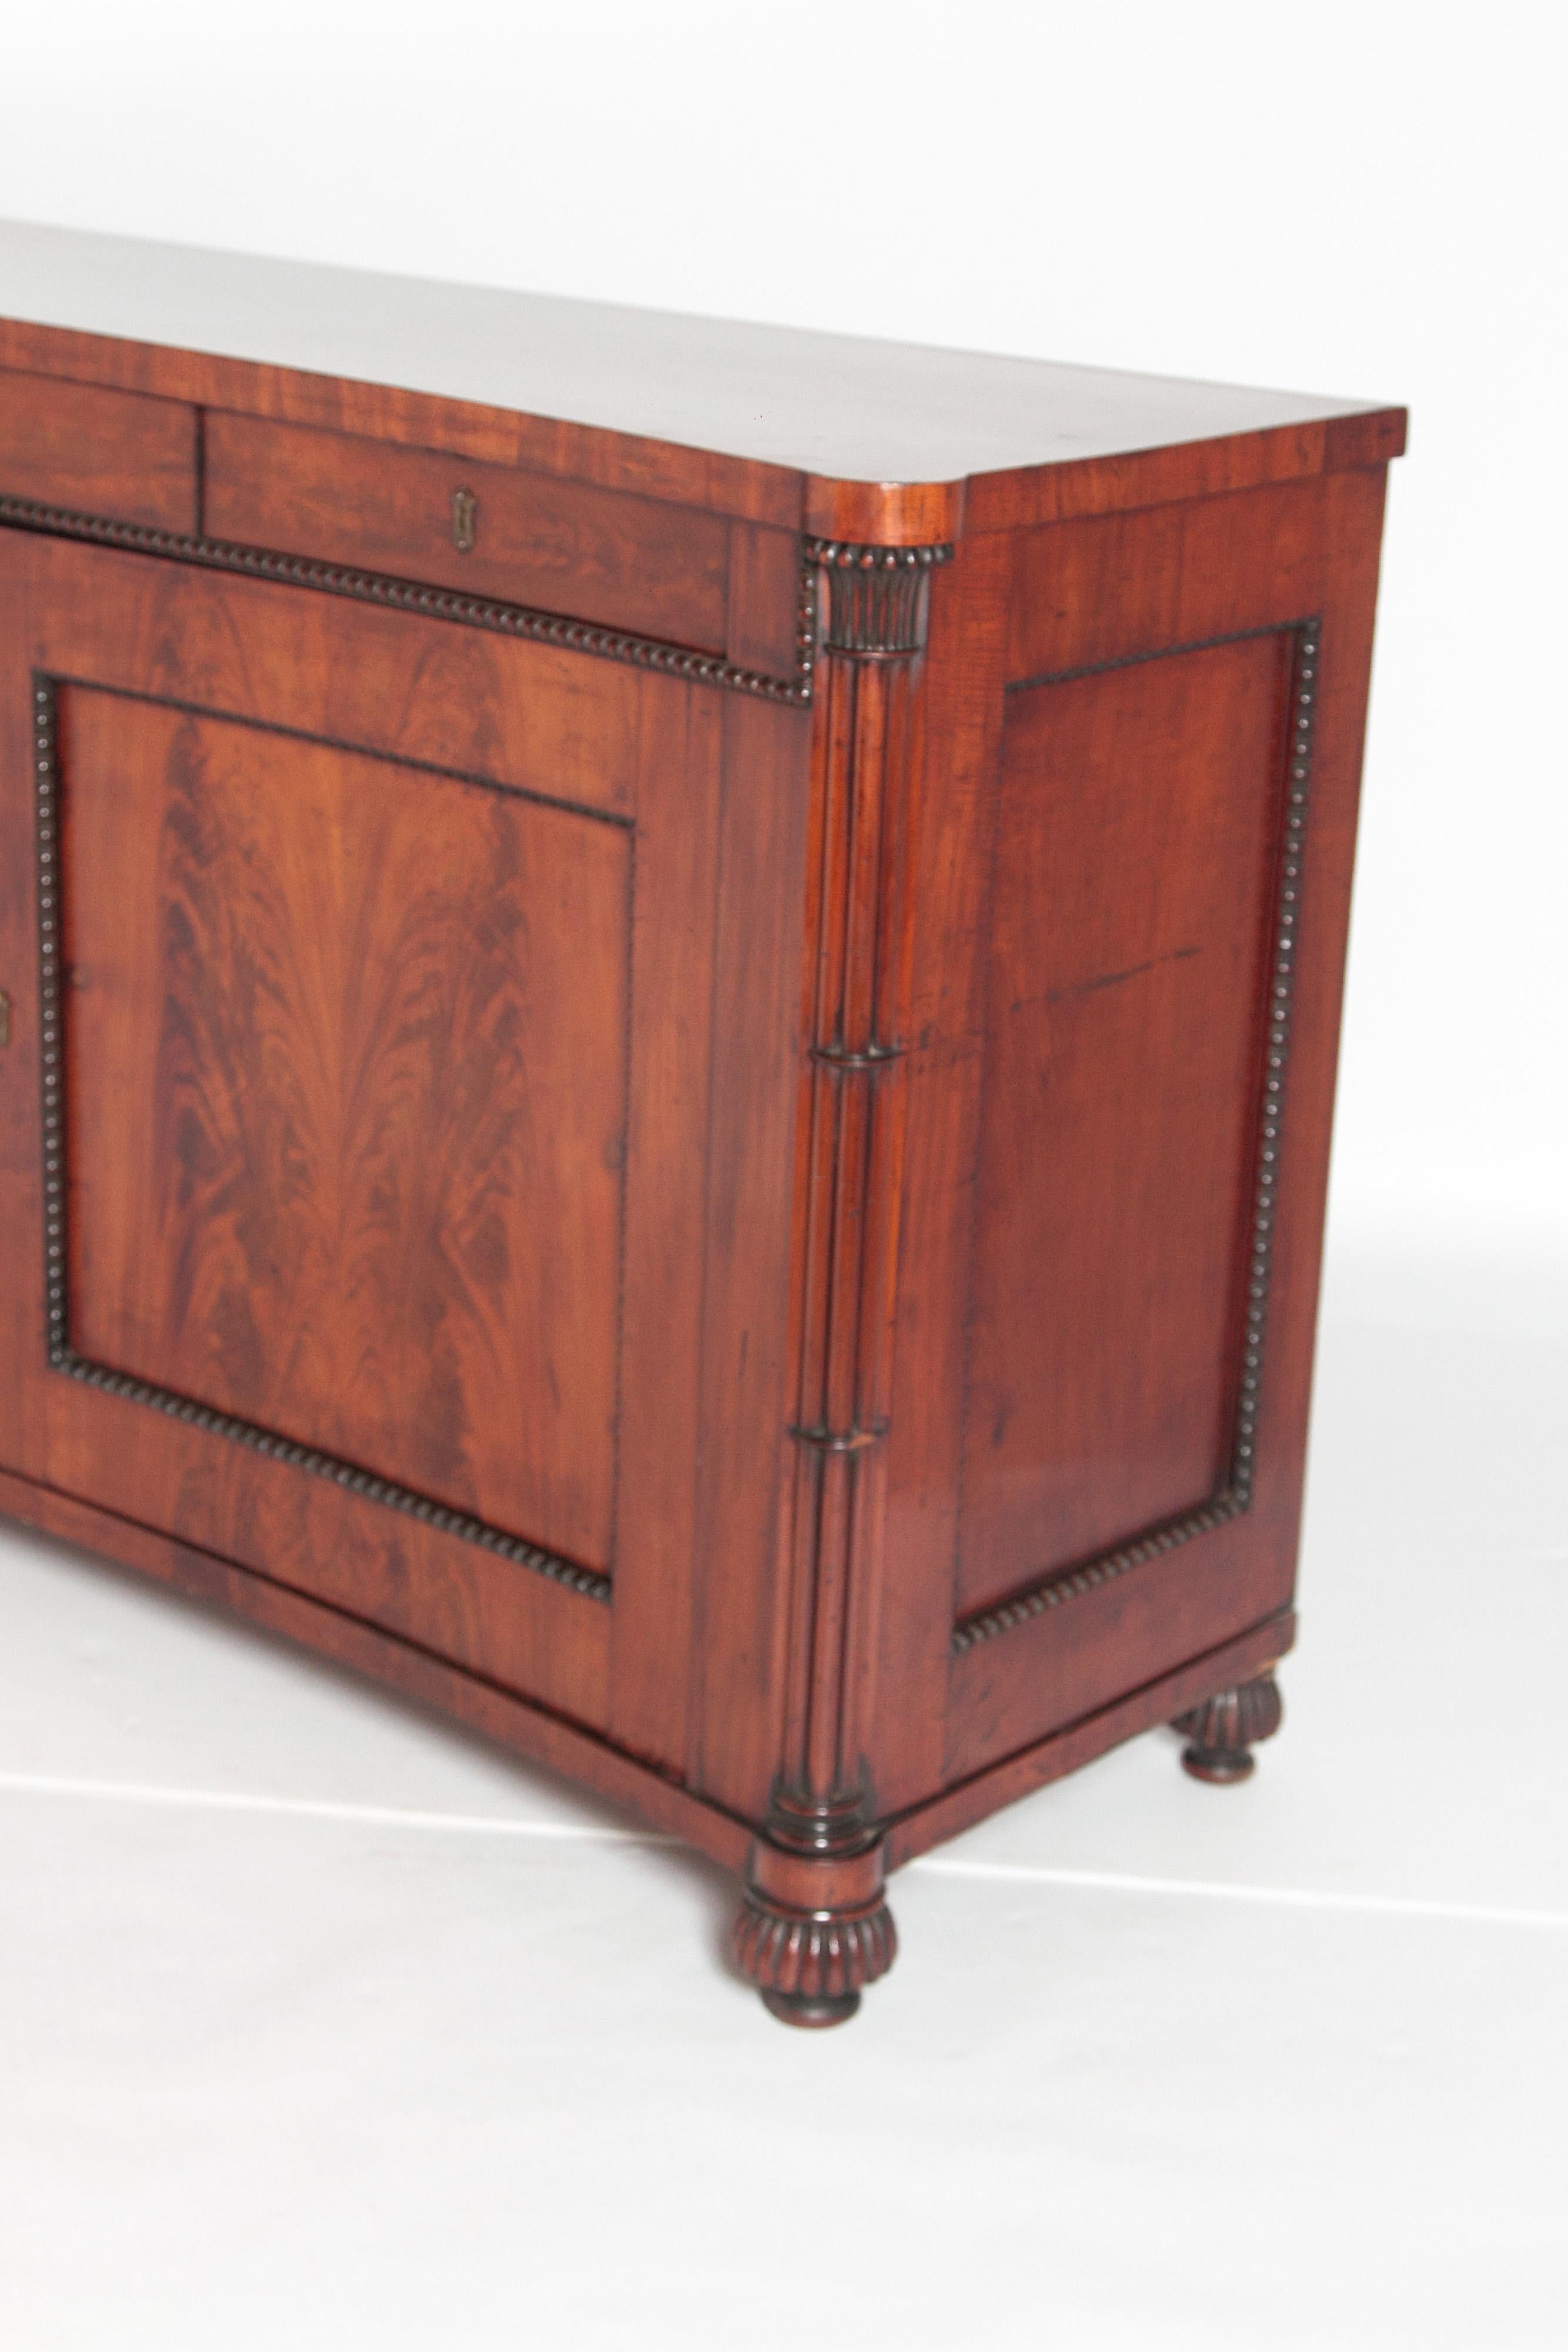 Early 19th Century Regency Bookmatched Crotch Mahogany Cabinet (Handgefertigt)